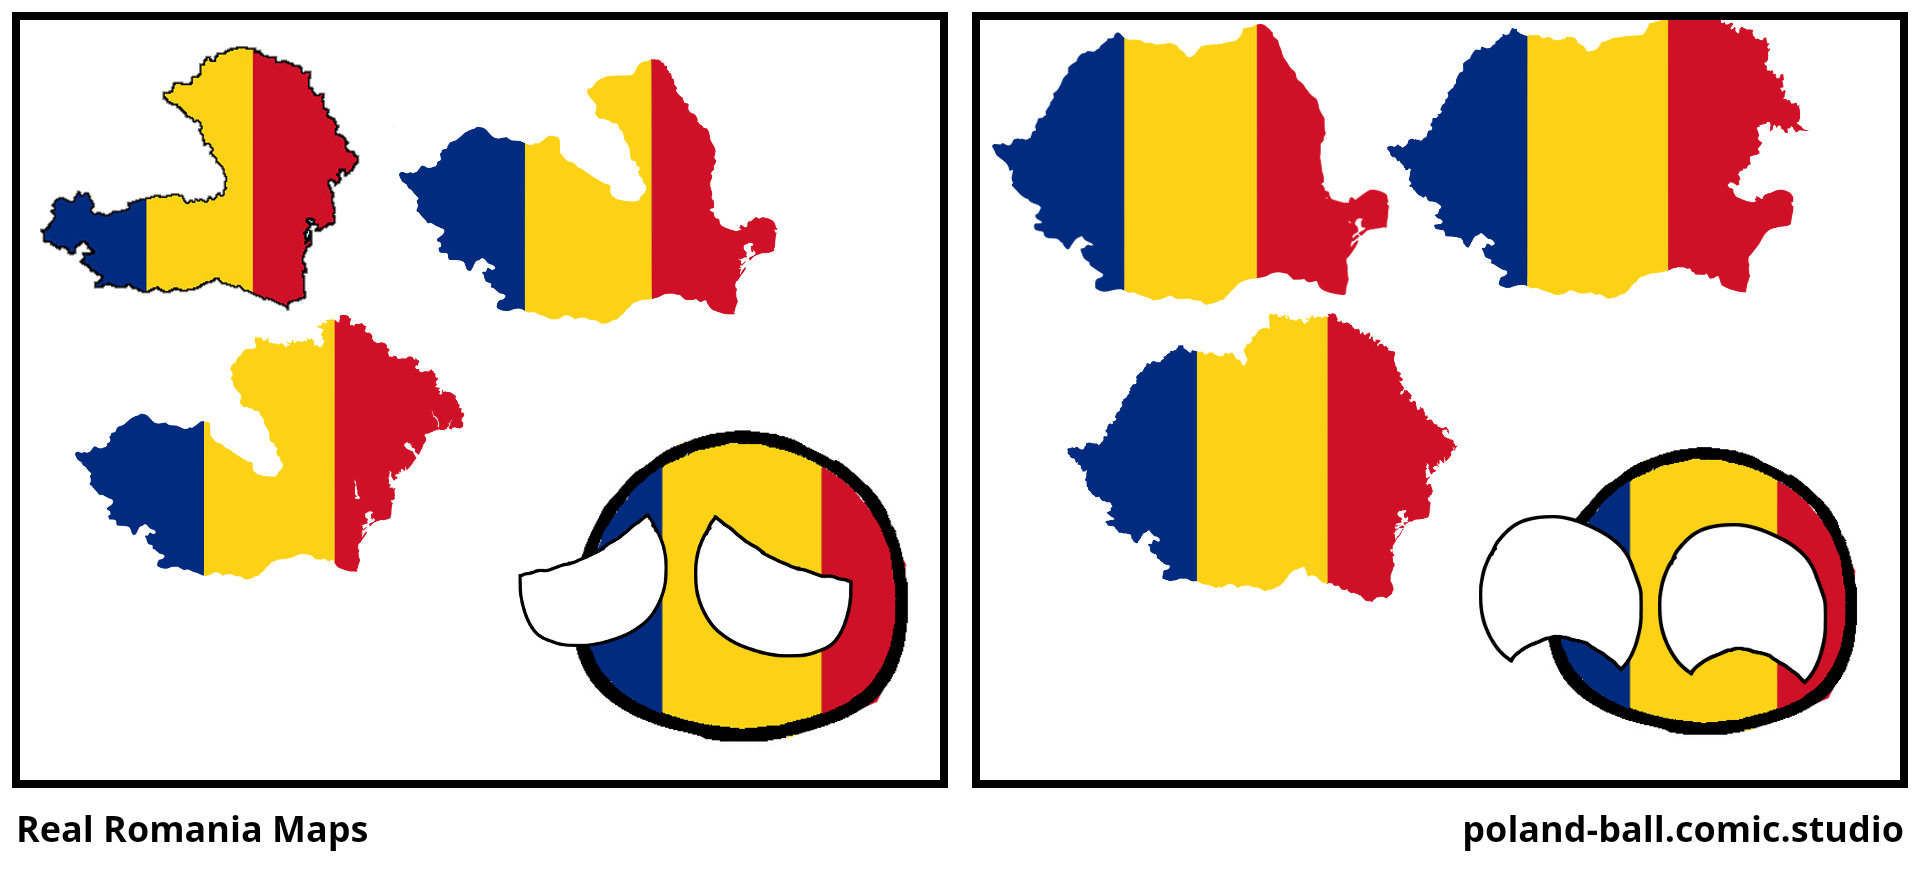 Real Romania Maps